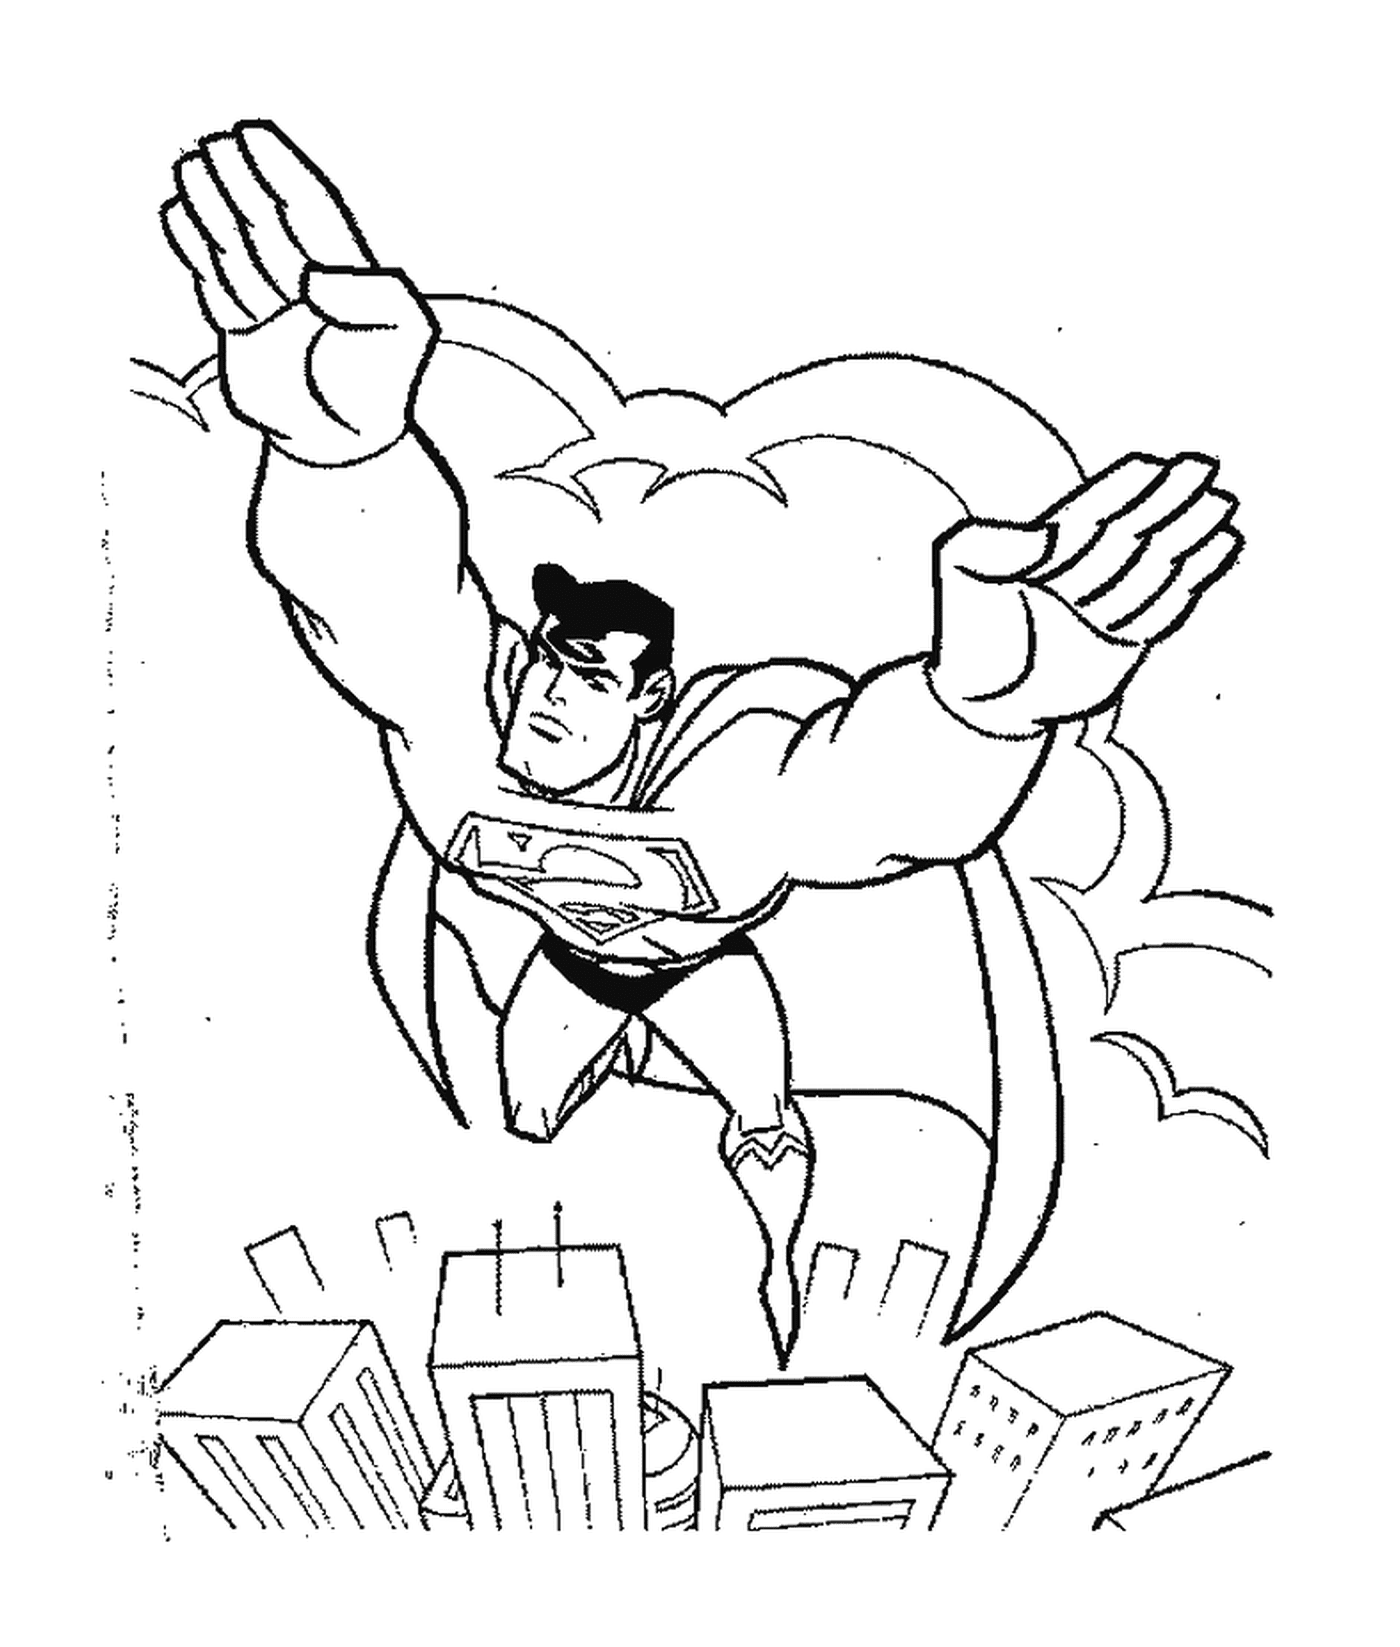  Superman vola sopra i grattacieli 